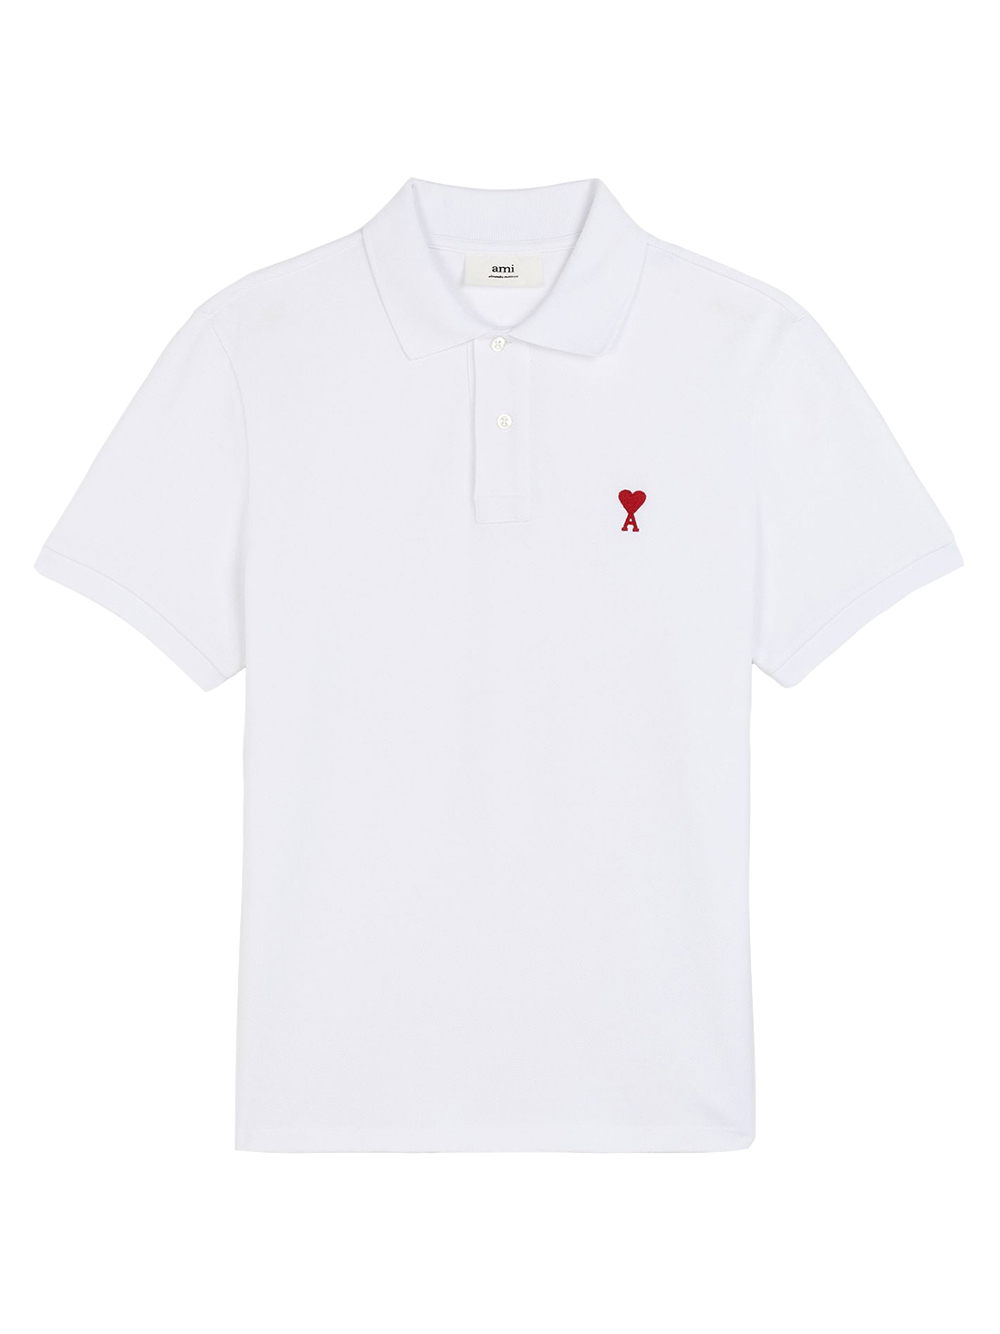 Ami Paris Ami De Coeur Embroidered Polo Shirt White/Red Men's - US